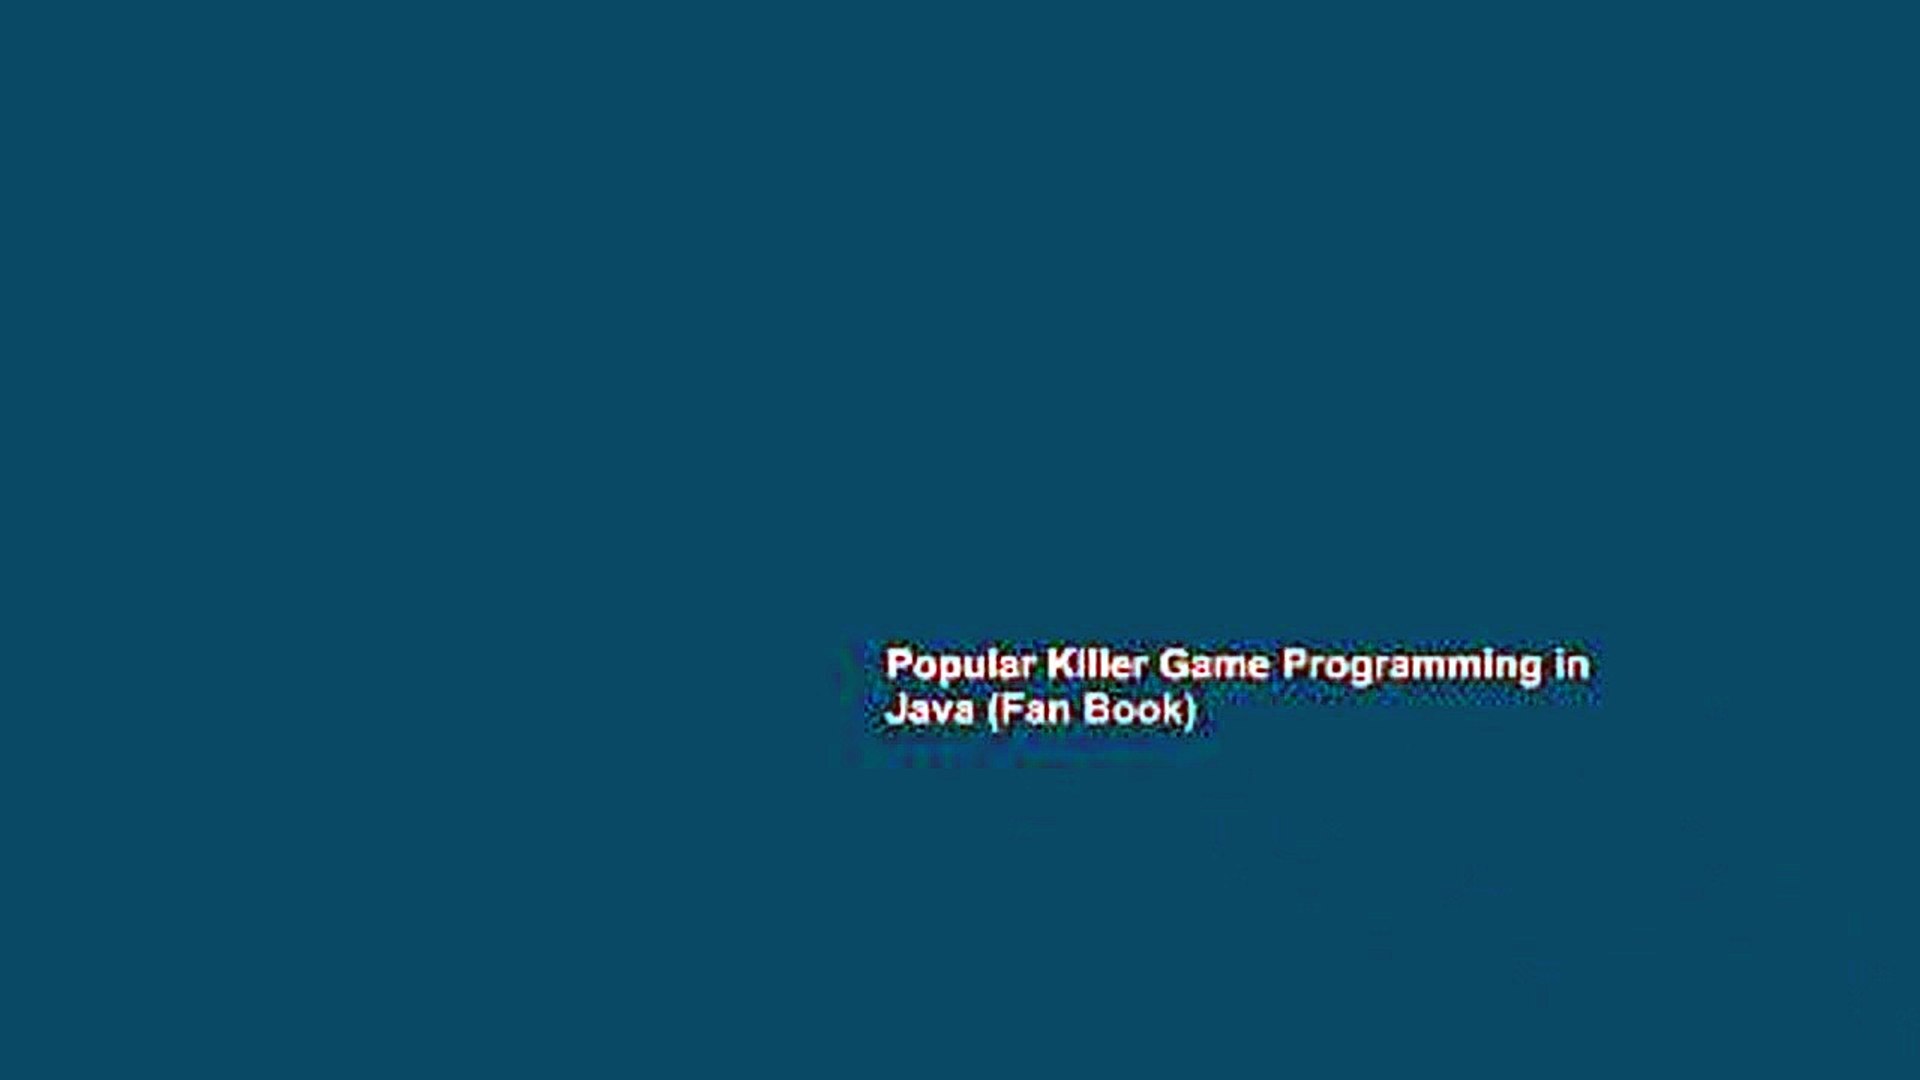 Popular Killer Game Programming in Java (Fan Book)